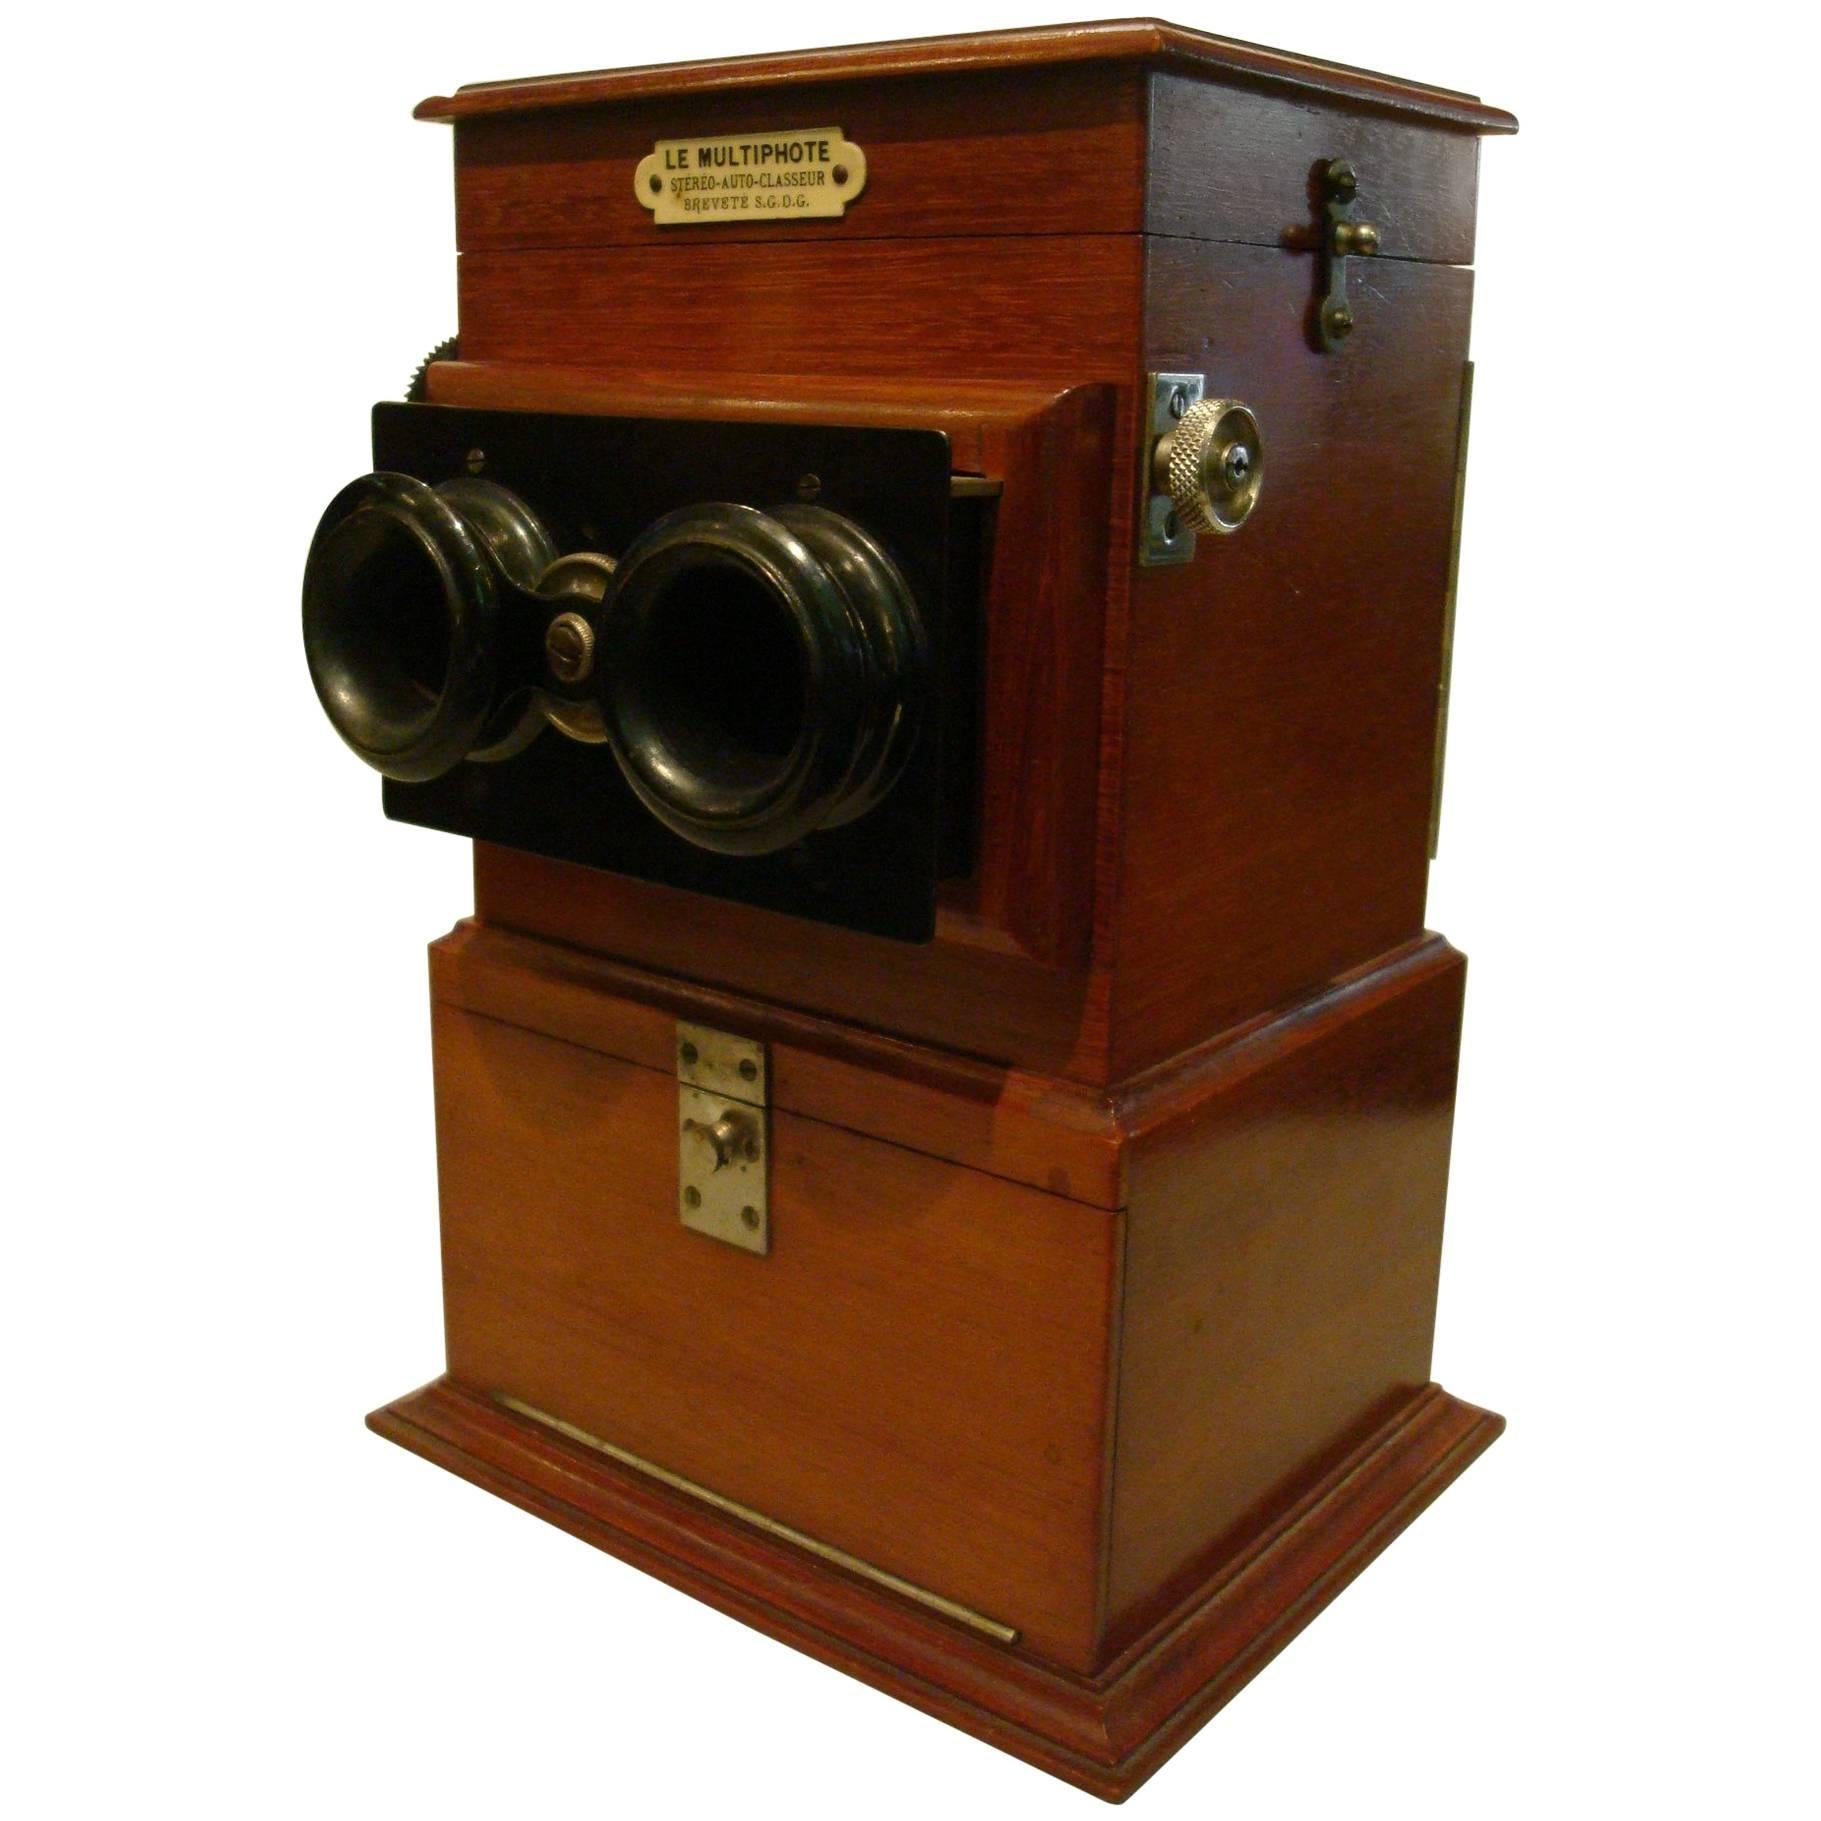 Stereoscope "Le Multiphote" Photogragh, France, 1900s